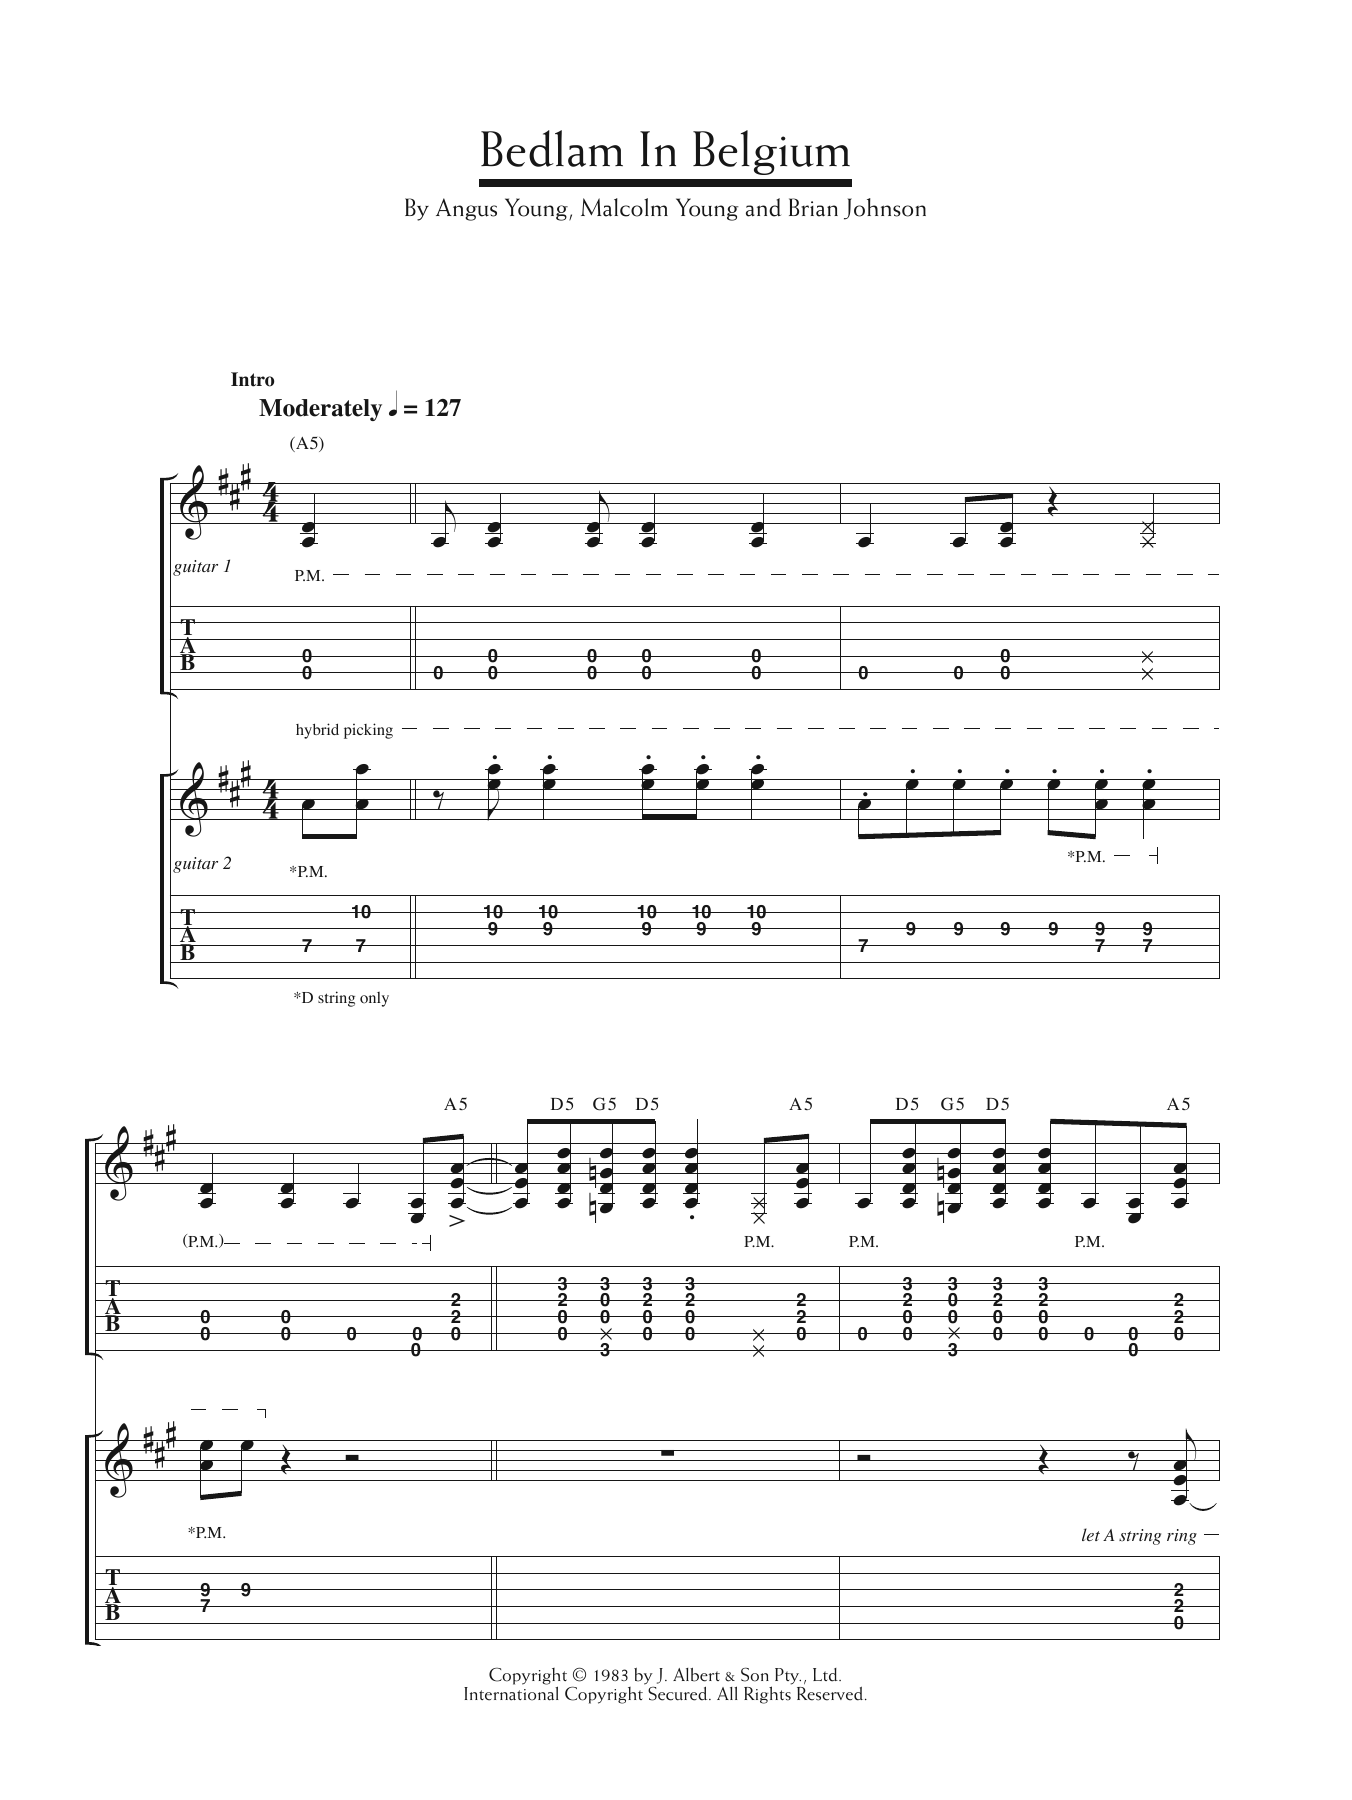 AC/DC Bedlam In Belgium Sheet Music Notes & Chords for Guitar Tab - Download or Print PDF